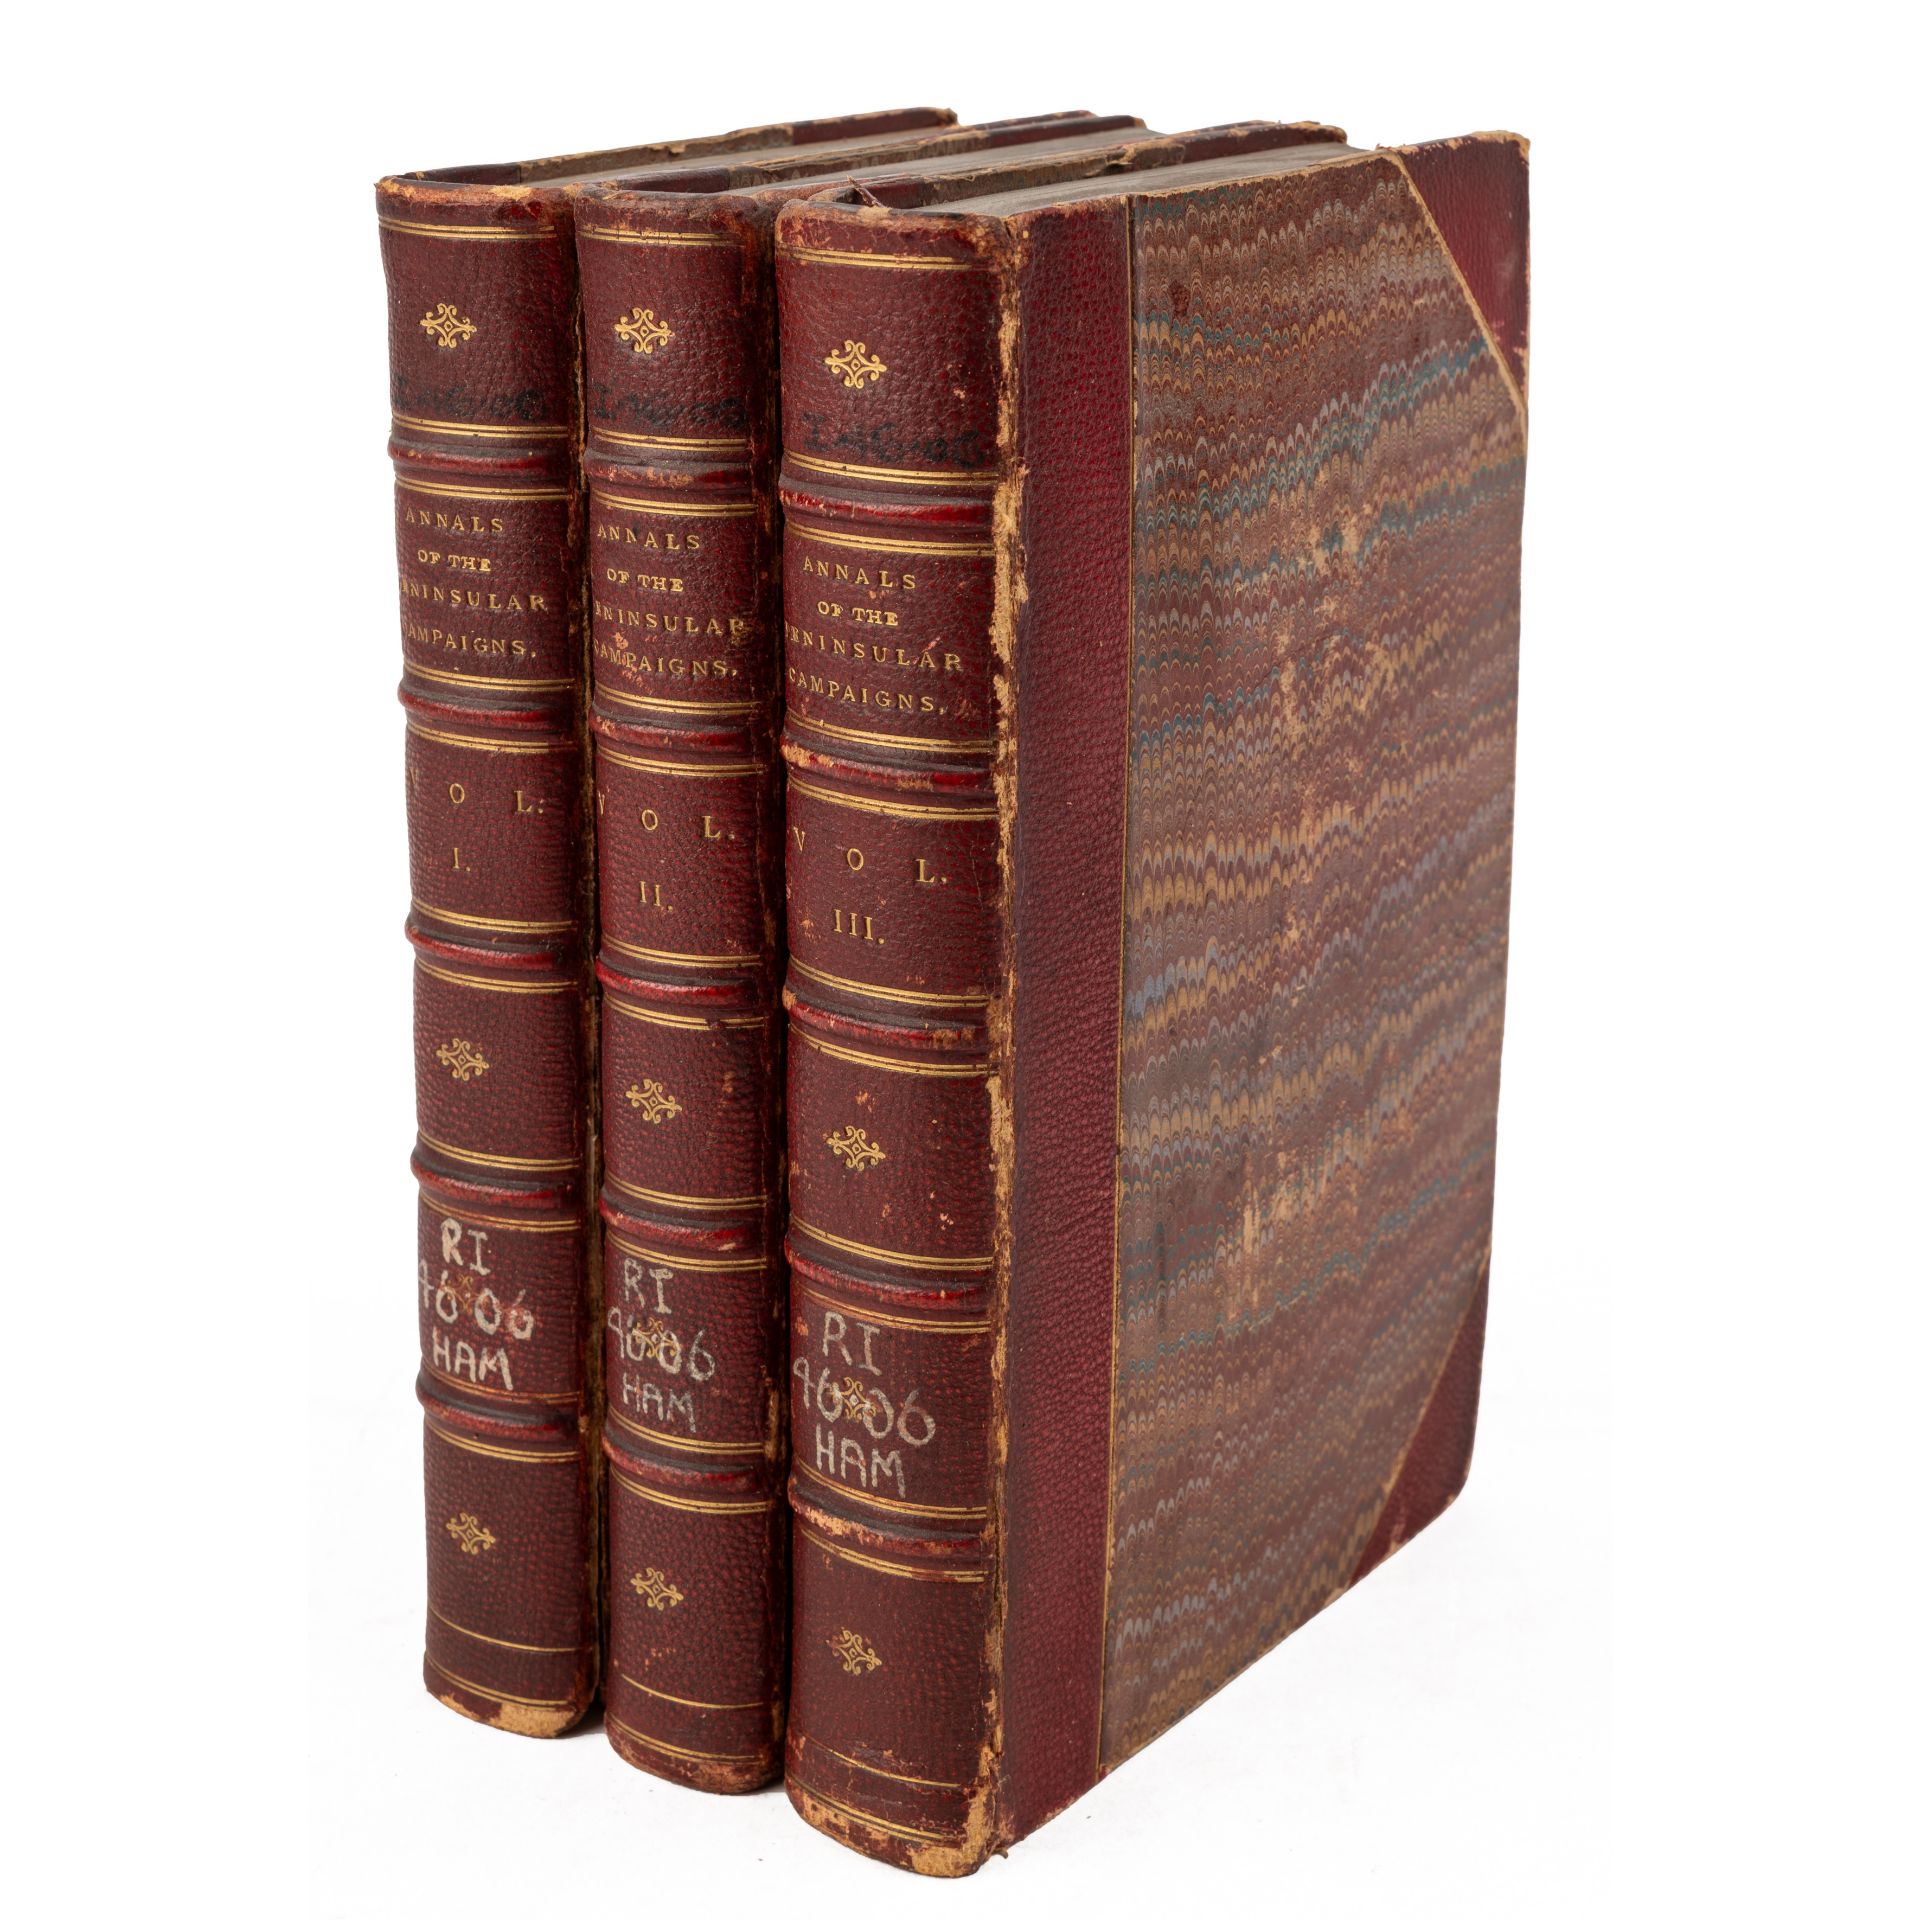 Hamilton (Capt Thomas). Annals of the Peninsular Campaigns from 1808-1814. 3 vols. 8vo. William